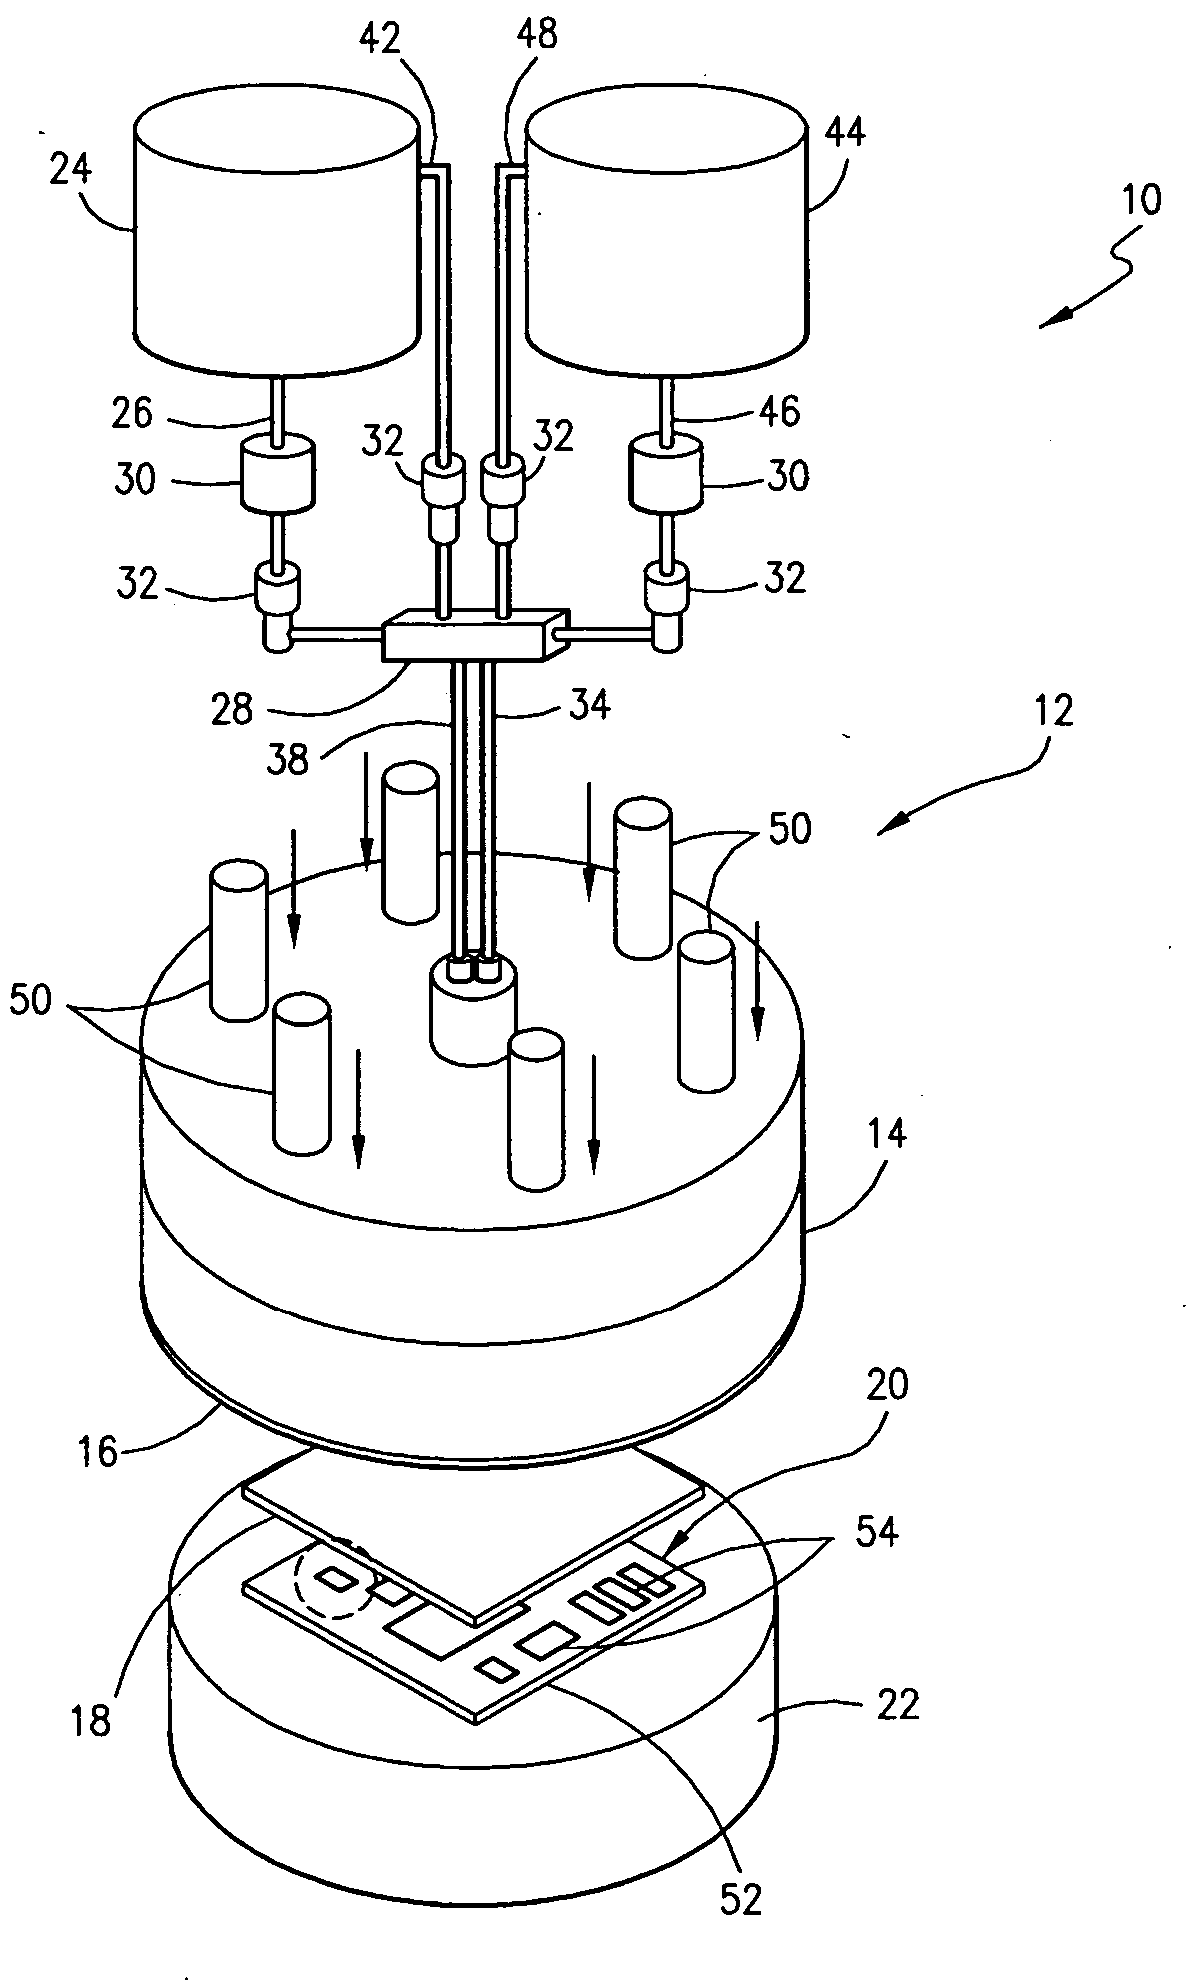 Method and apparatus for sealing flex circuits having heat sensitive circuit elements